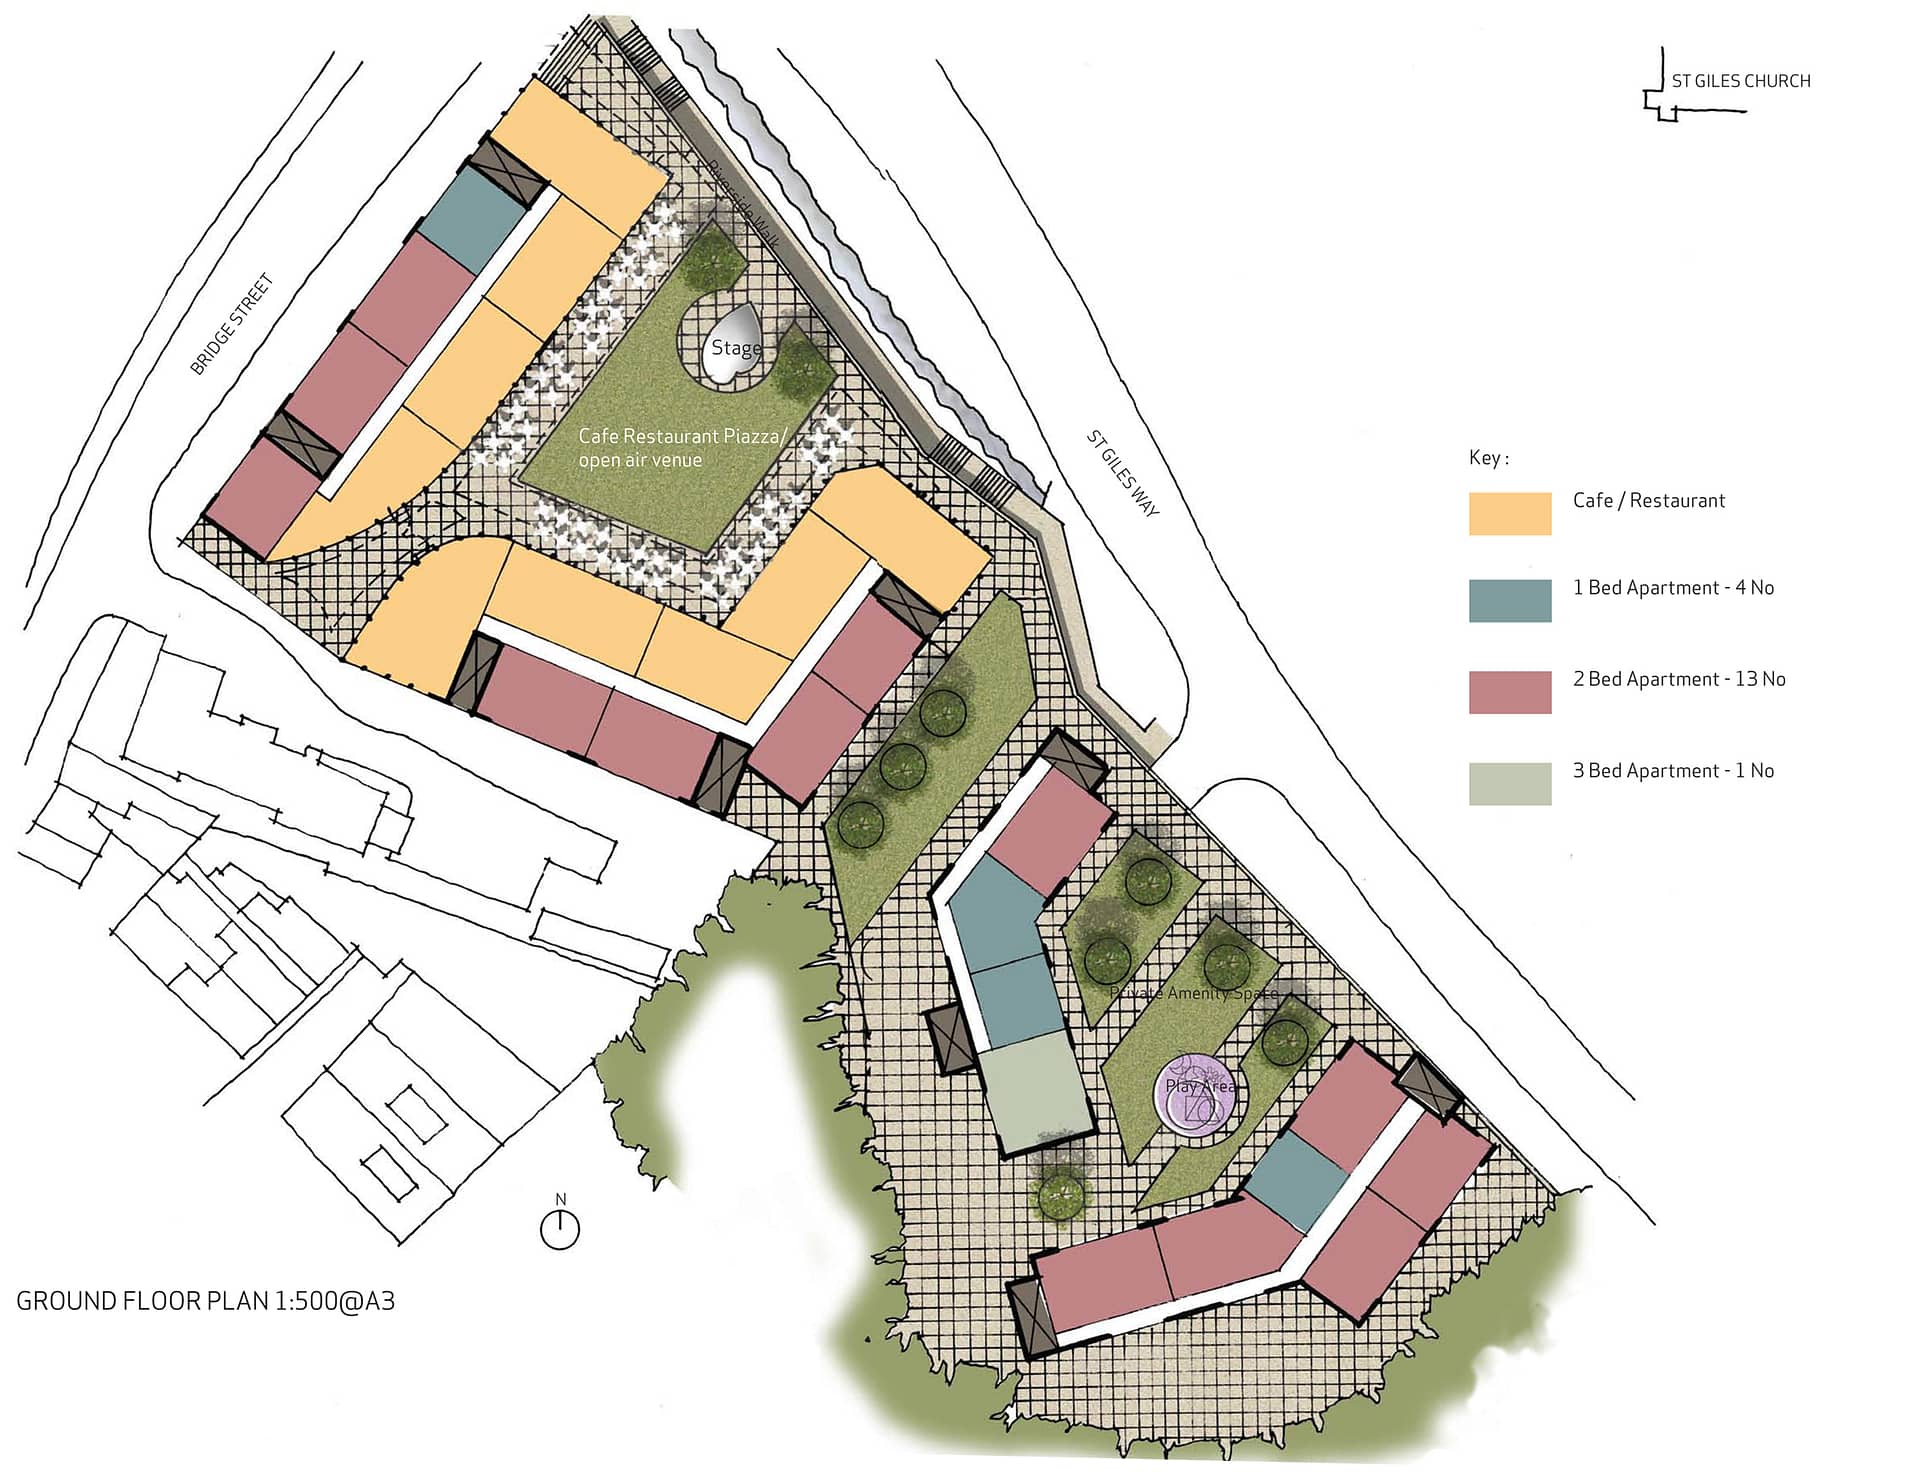 Proposed Mixed-Use Development, Wrexham Ground Floor Plan